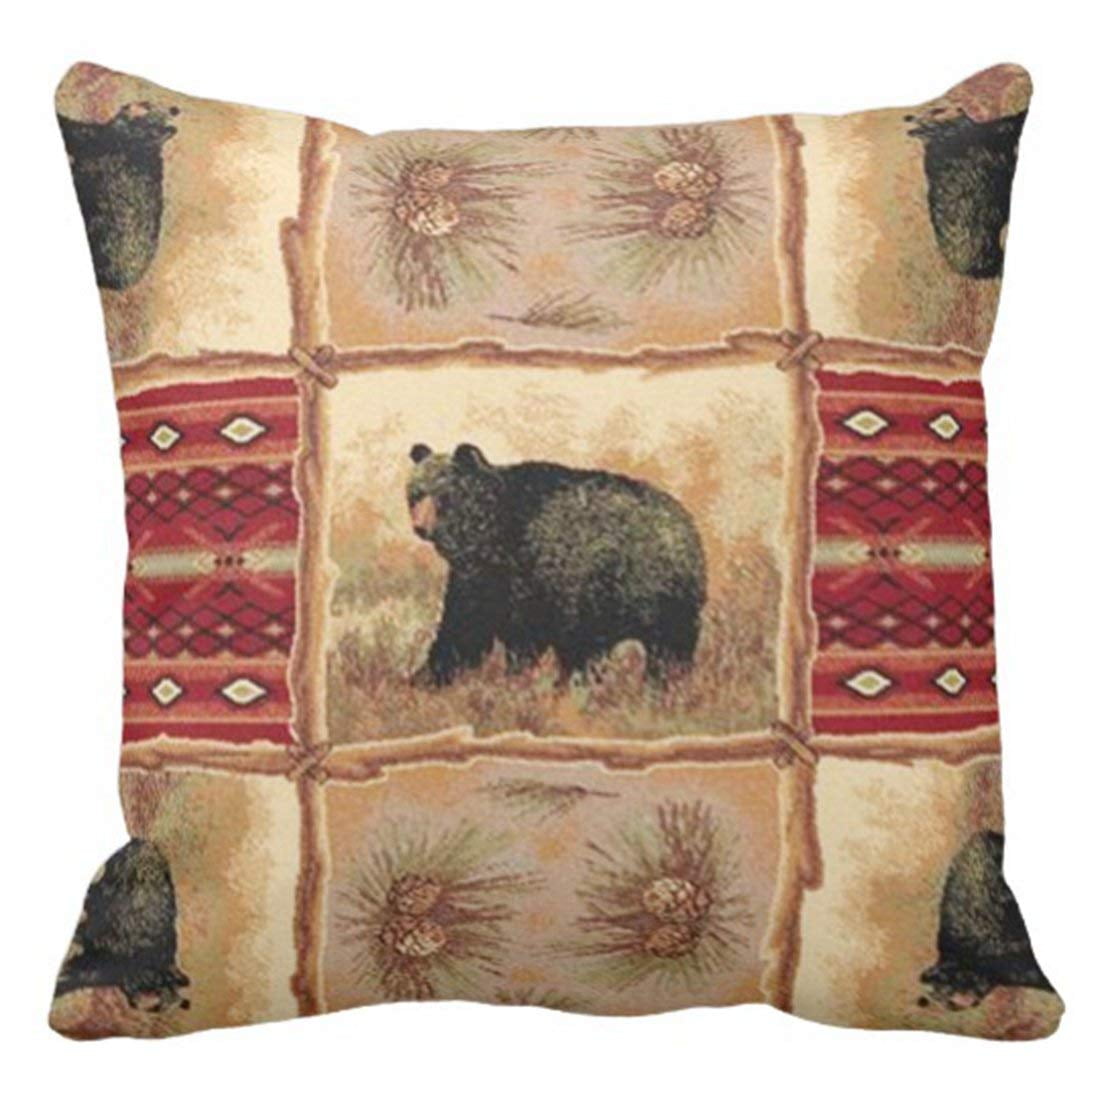 18 x 18 x 5" Wilderness Lodge Cabin Western Bear Print Throw Pillow W/Stuffing 